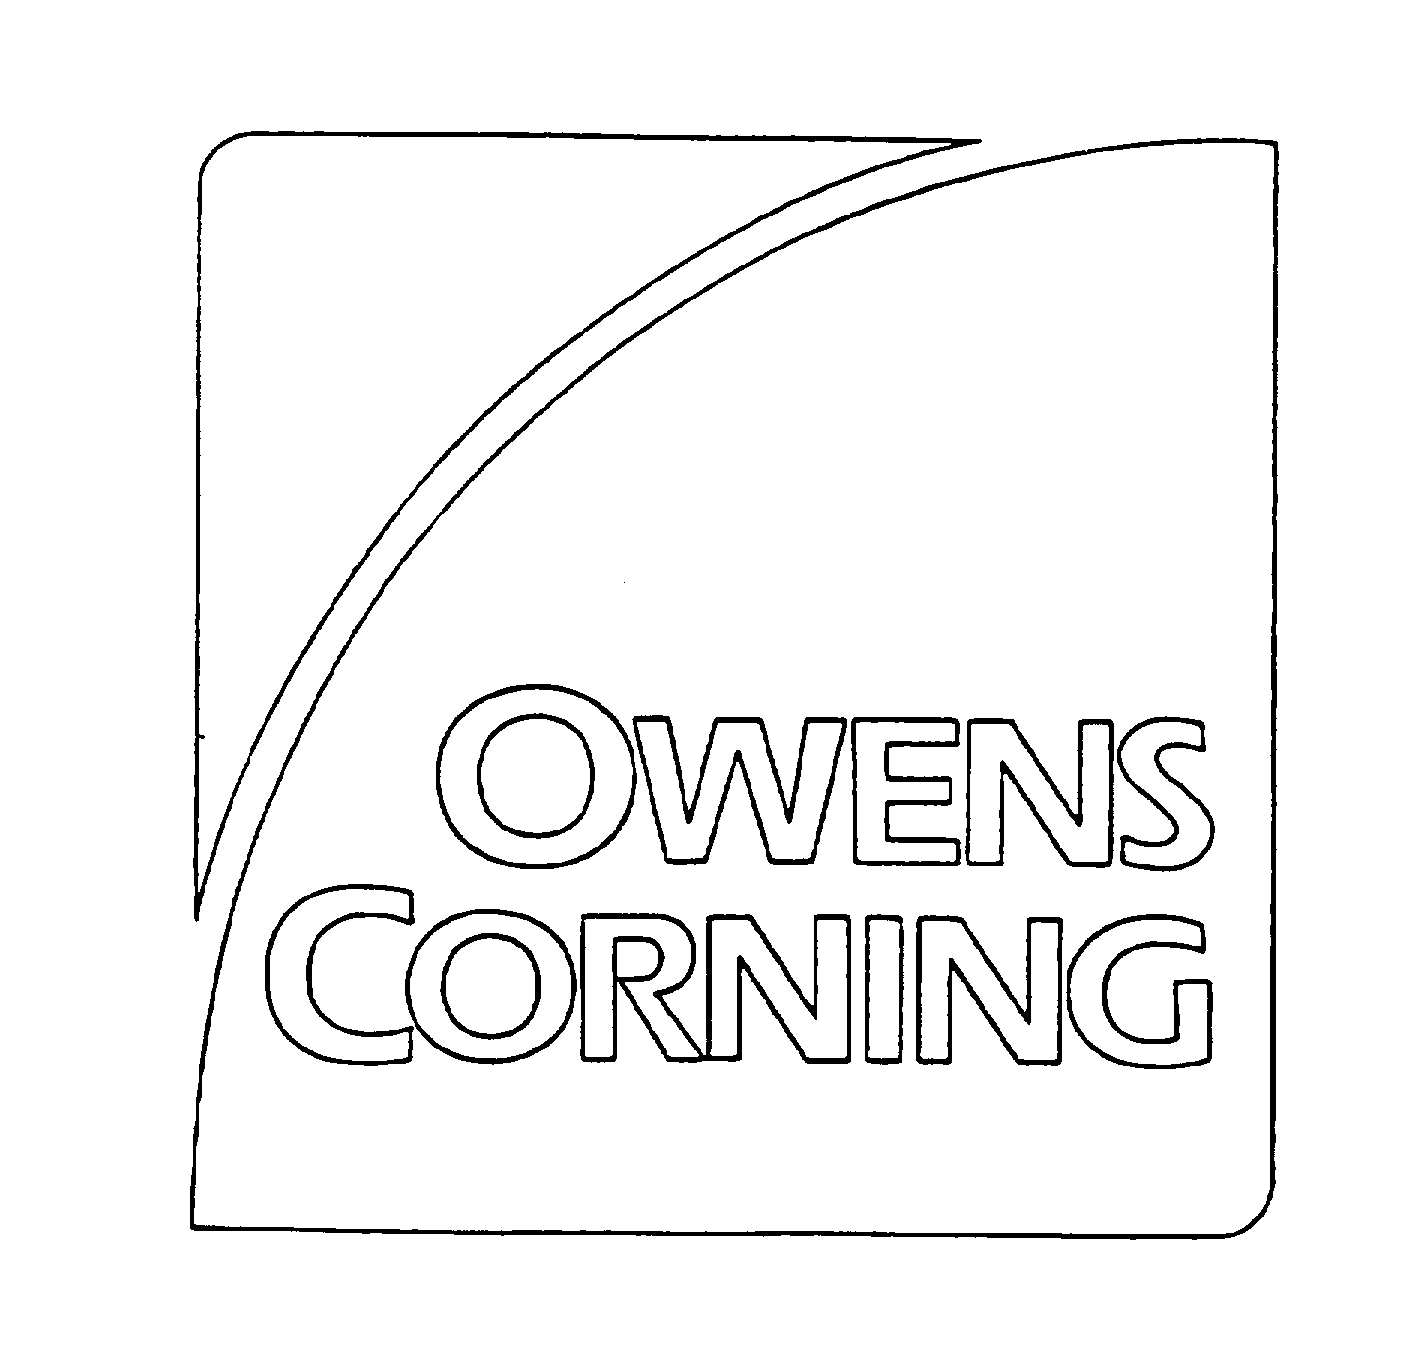 OWENS CORNING